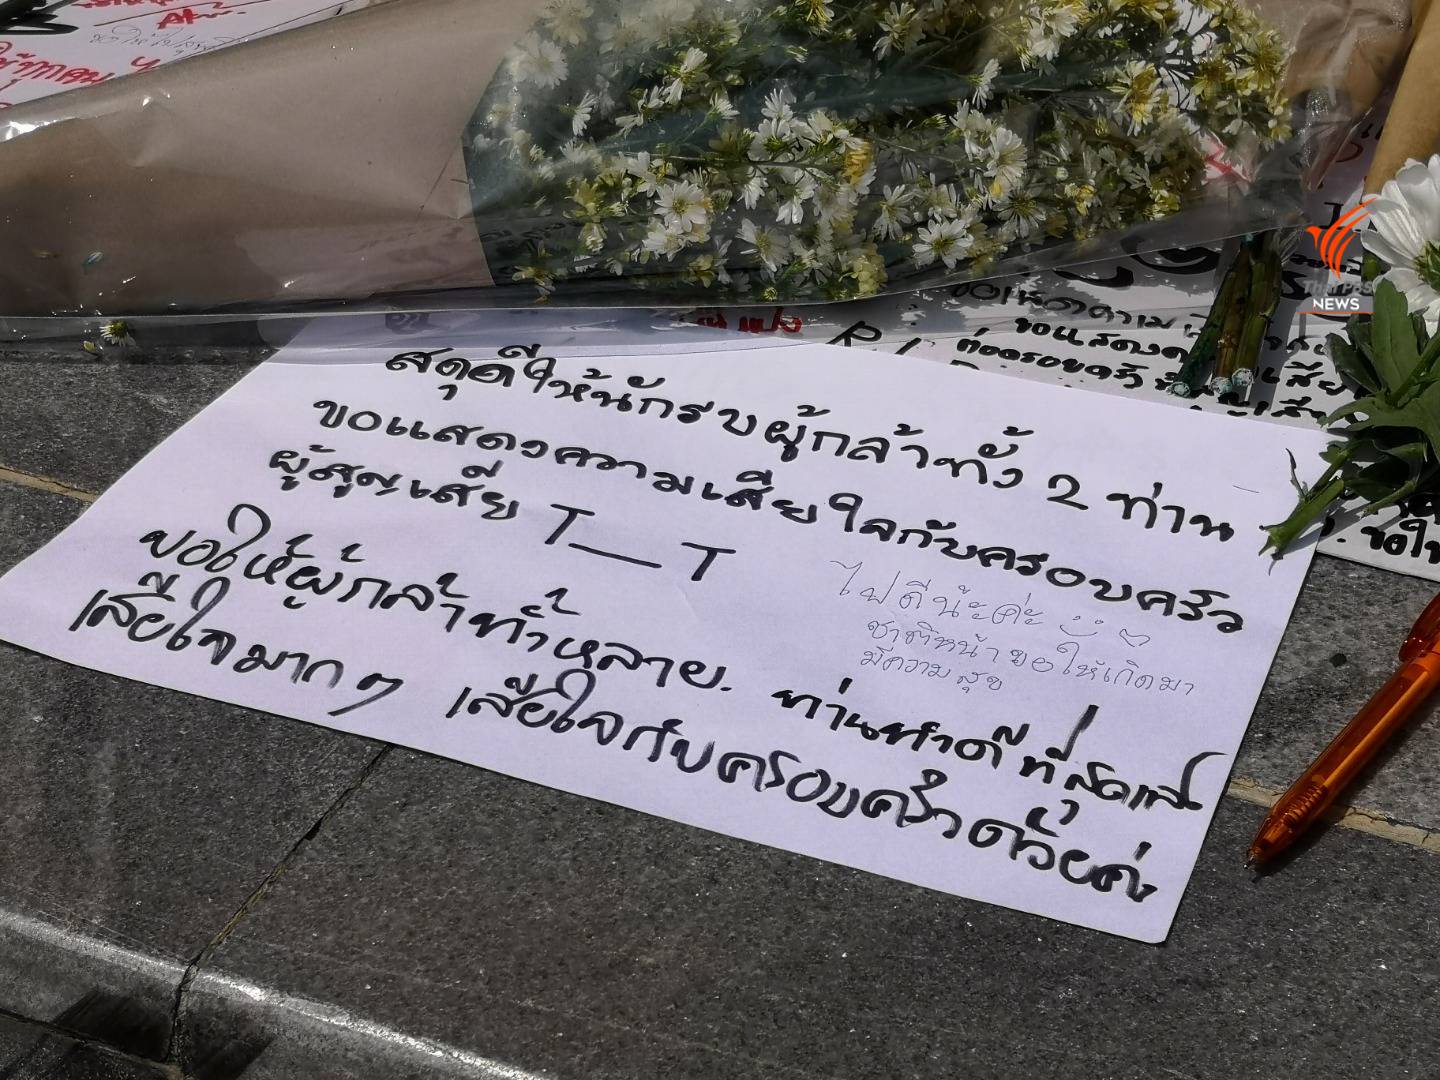 https://news.thaipbs.or.th/media/DL5UJCwG7QGD4DP3NqUTGCjb7kBvA4.jpg